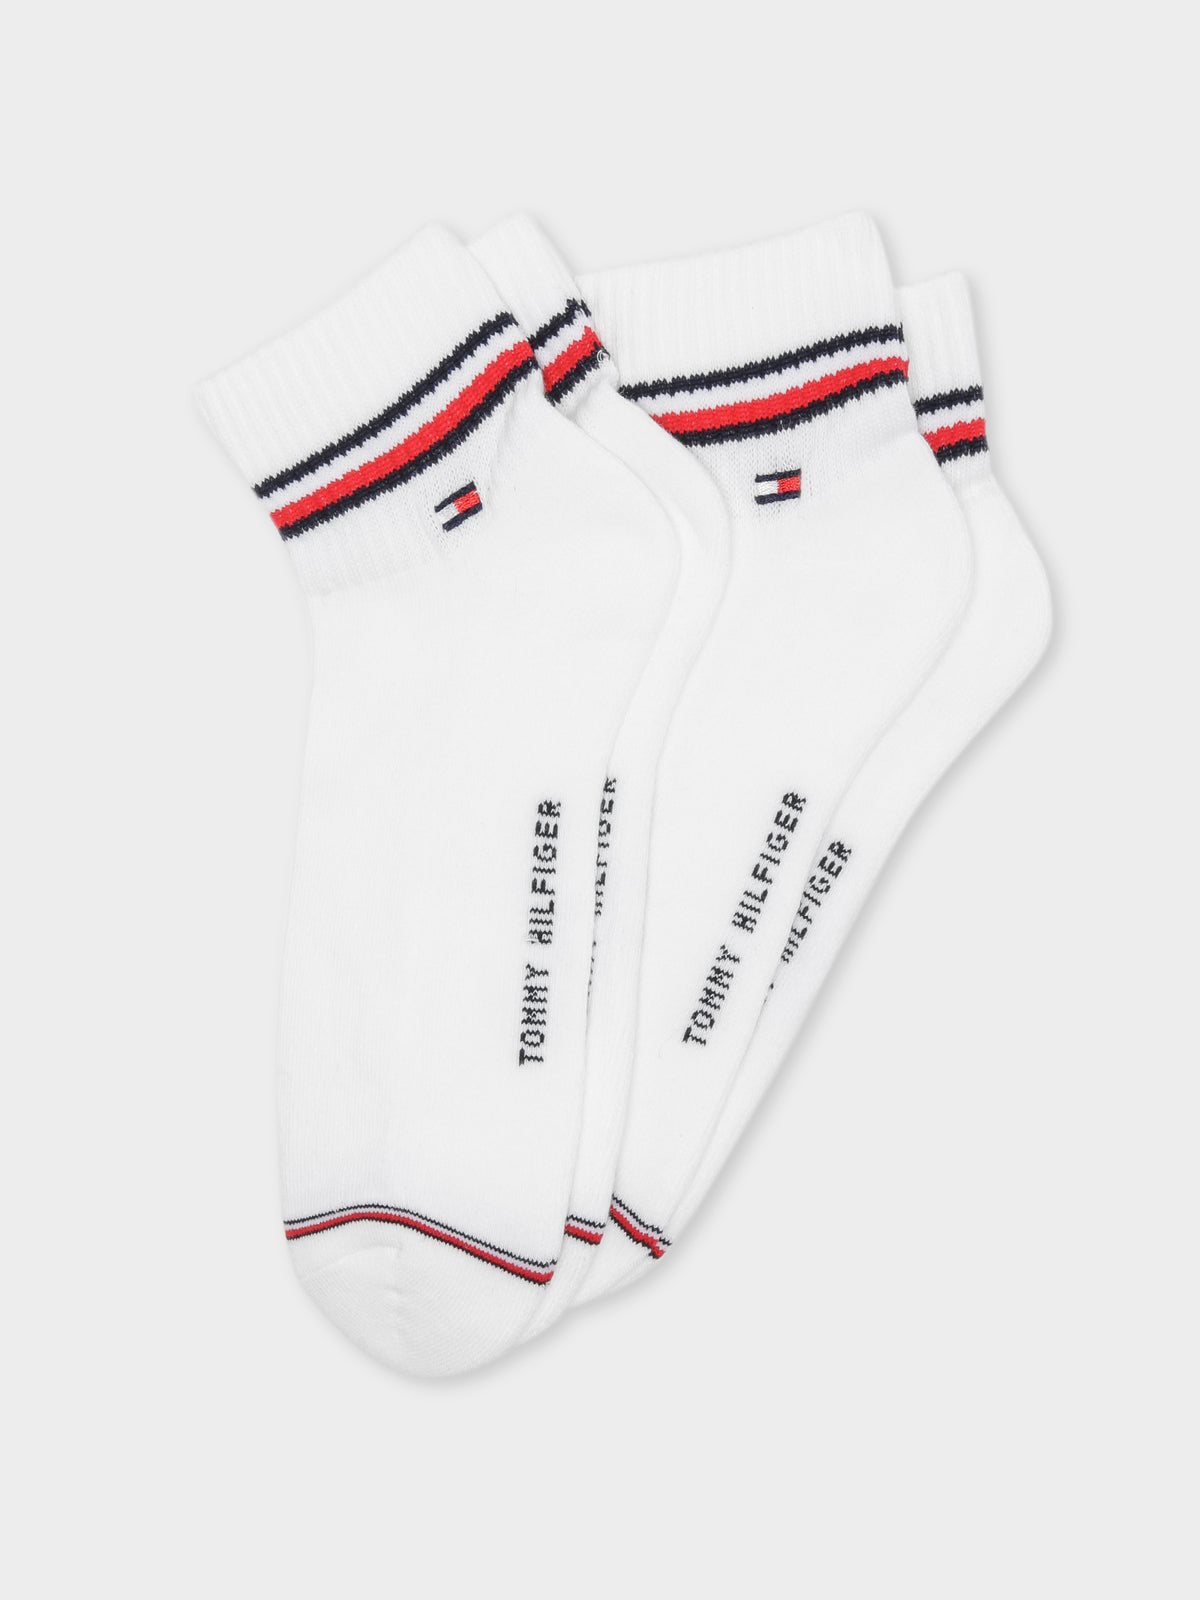 2 Pairs of Iconic Quarter Socks in White